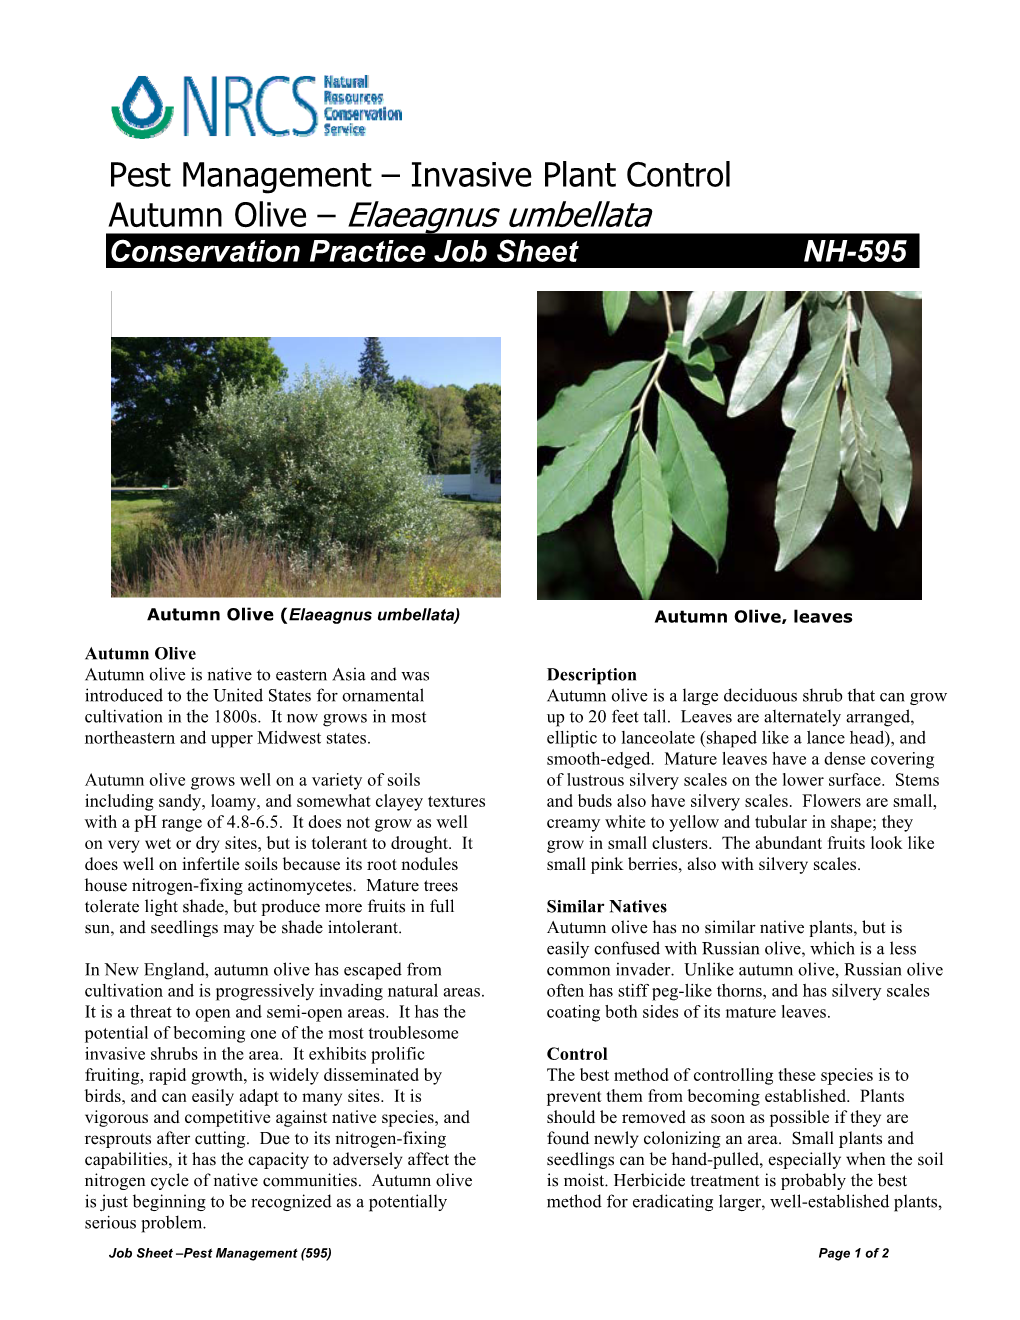 Invasive Plant Control Autumn Olive – Elaeagnus Umbellata Conservation Practice Job Sheet NH-595